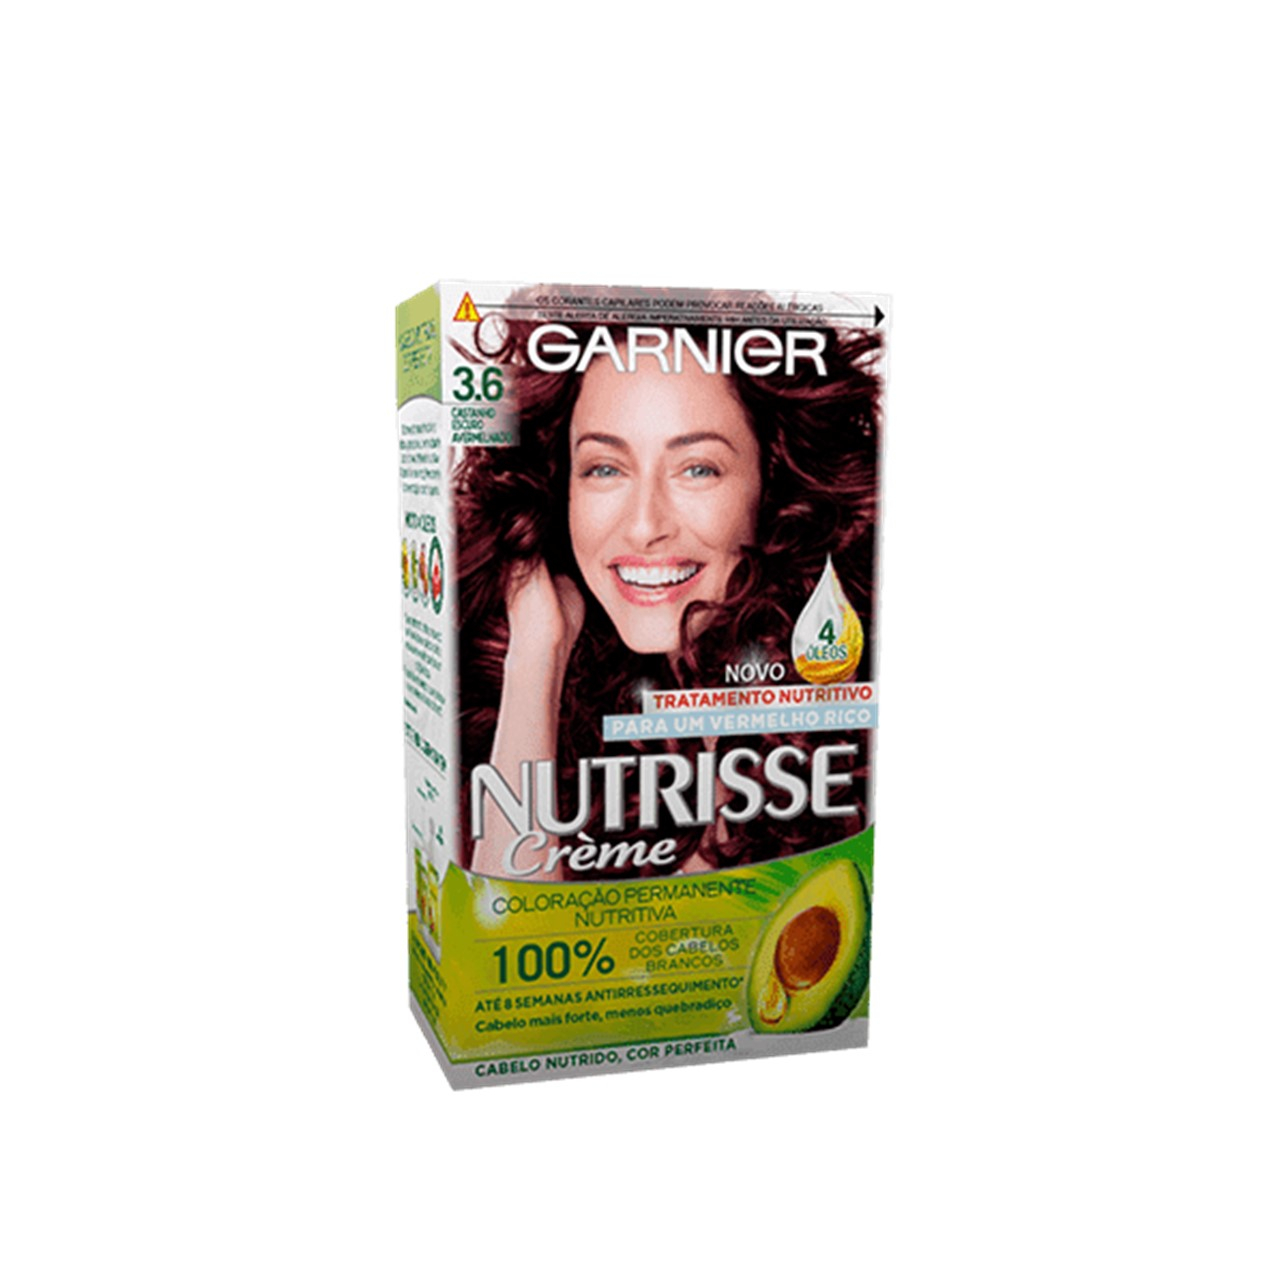 Garnier Nutrisse Crème 3.6 Deep Reddish Brown Permanent Hair Dye